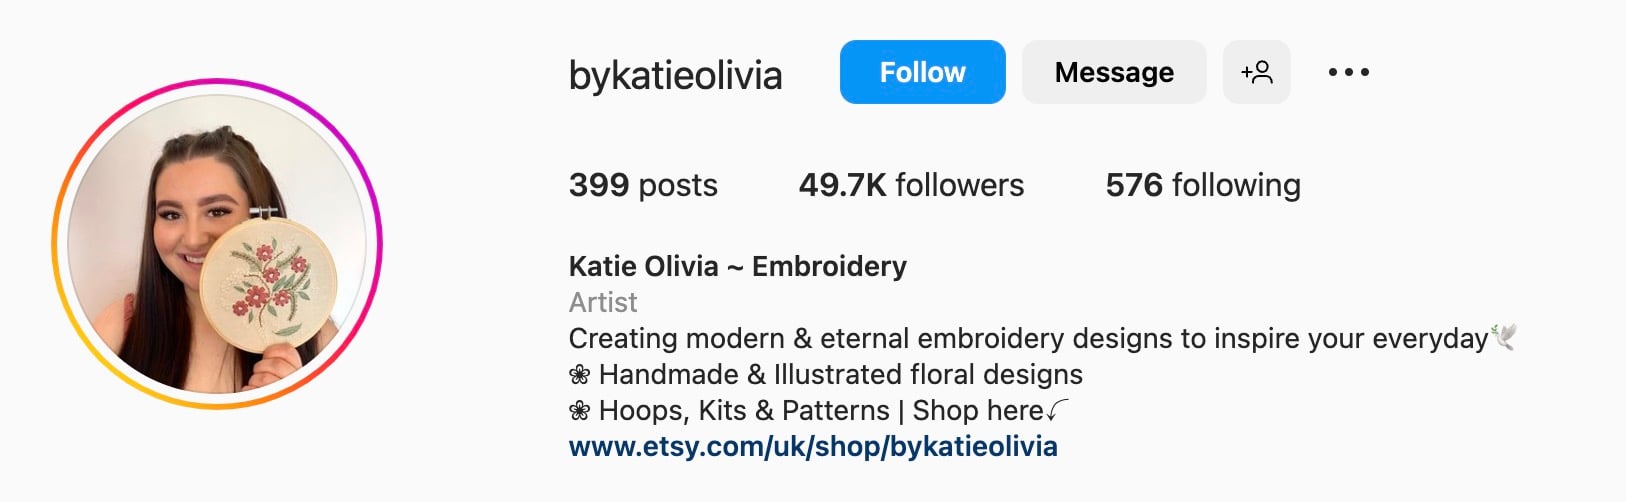 Creative Instagram bio ideas for Etsy shops, katie olivia